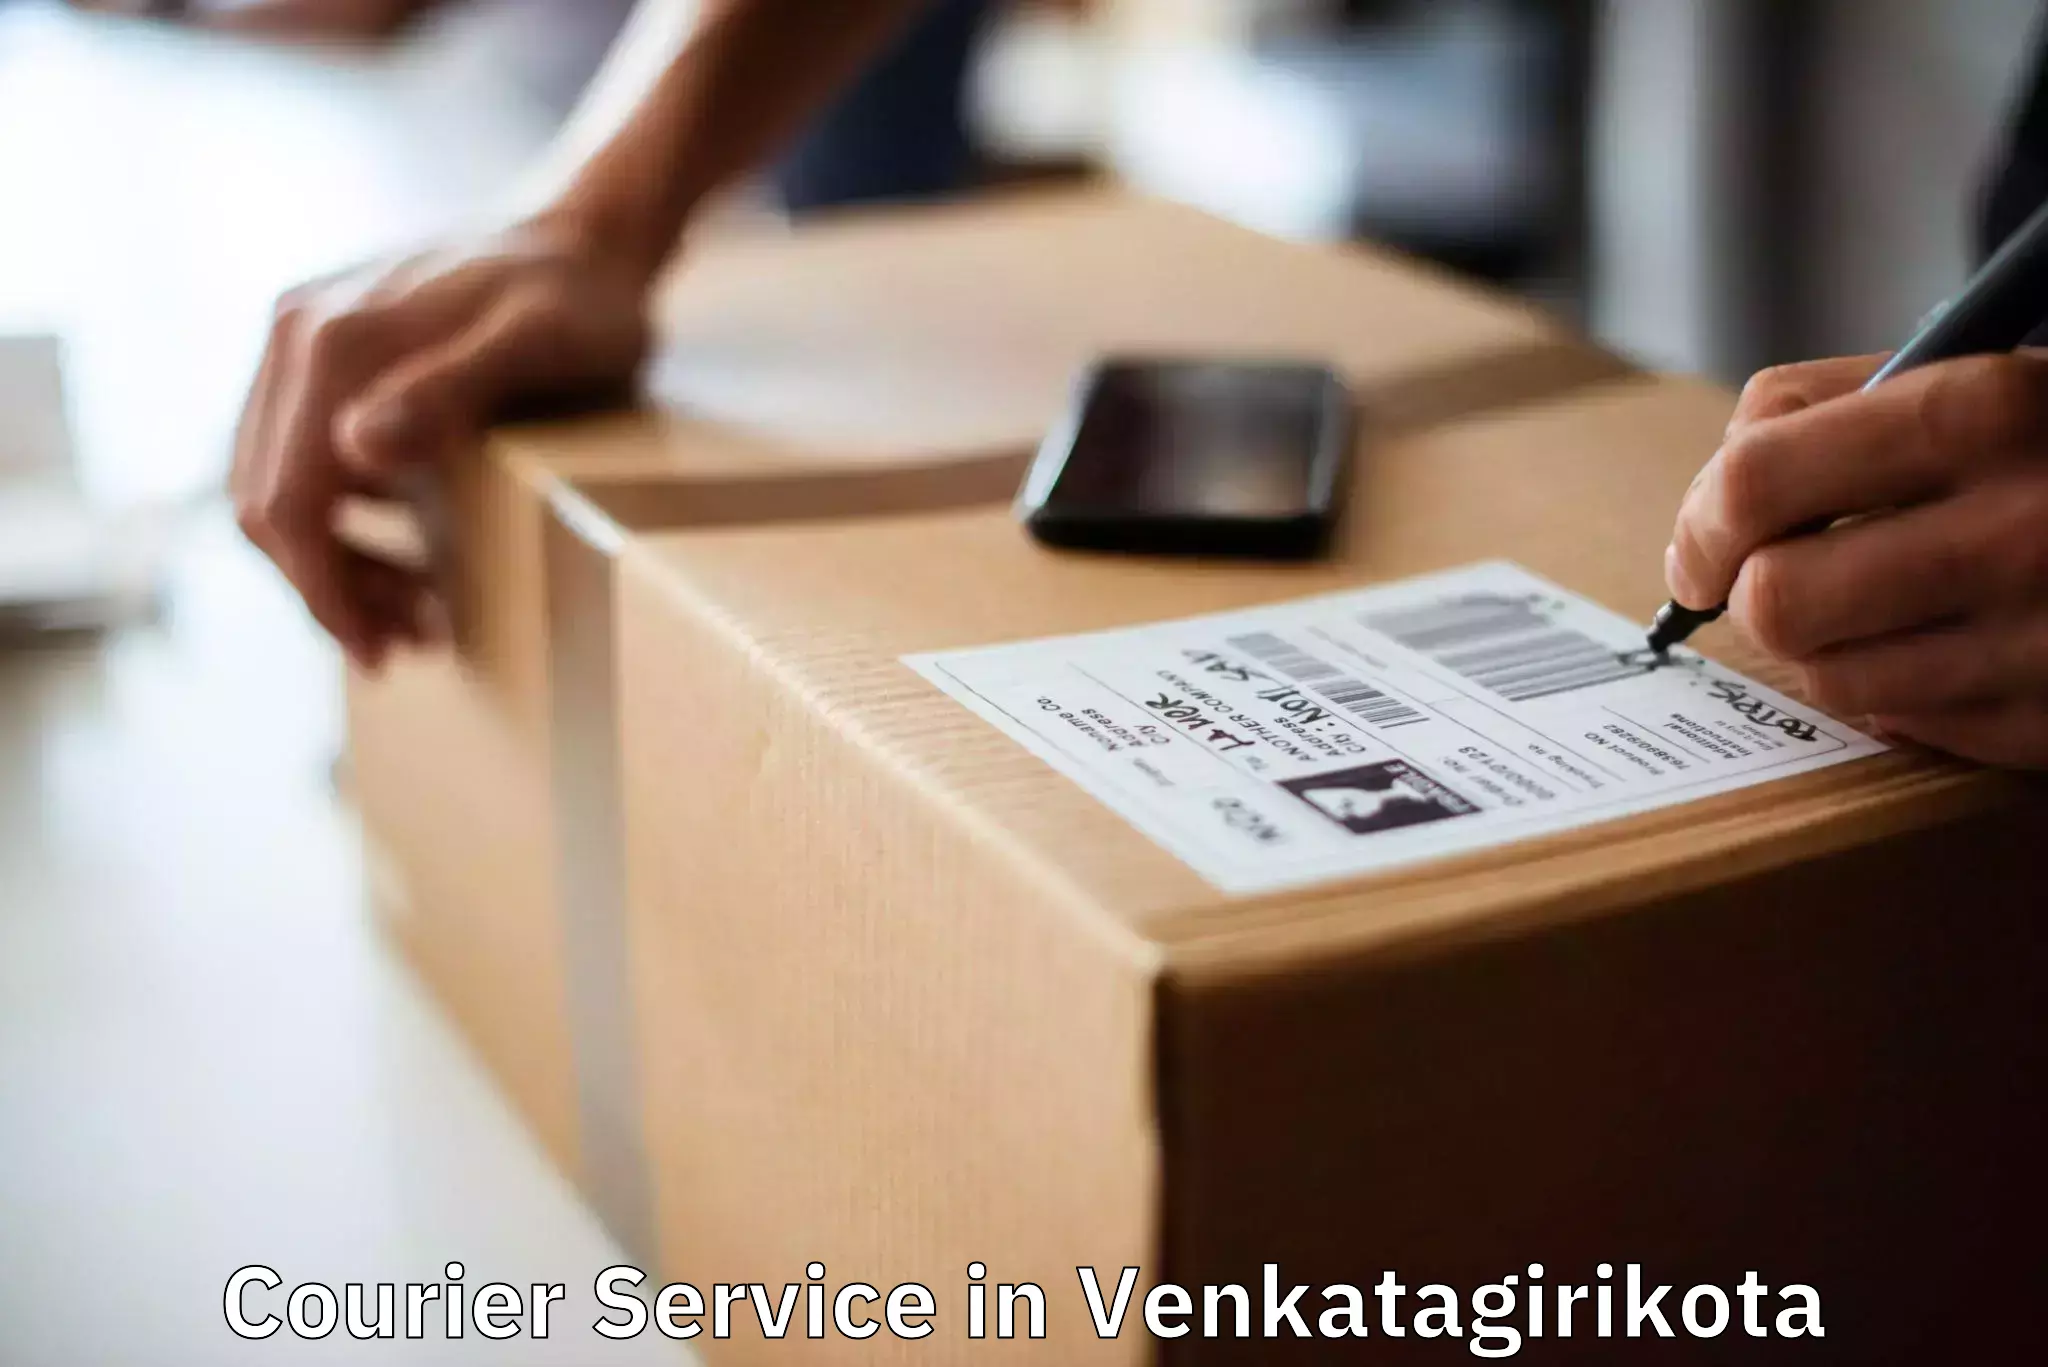 Efficient parcel service in Venkatagirikota